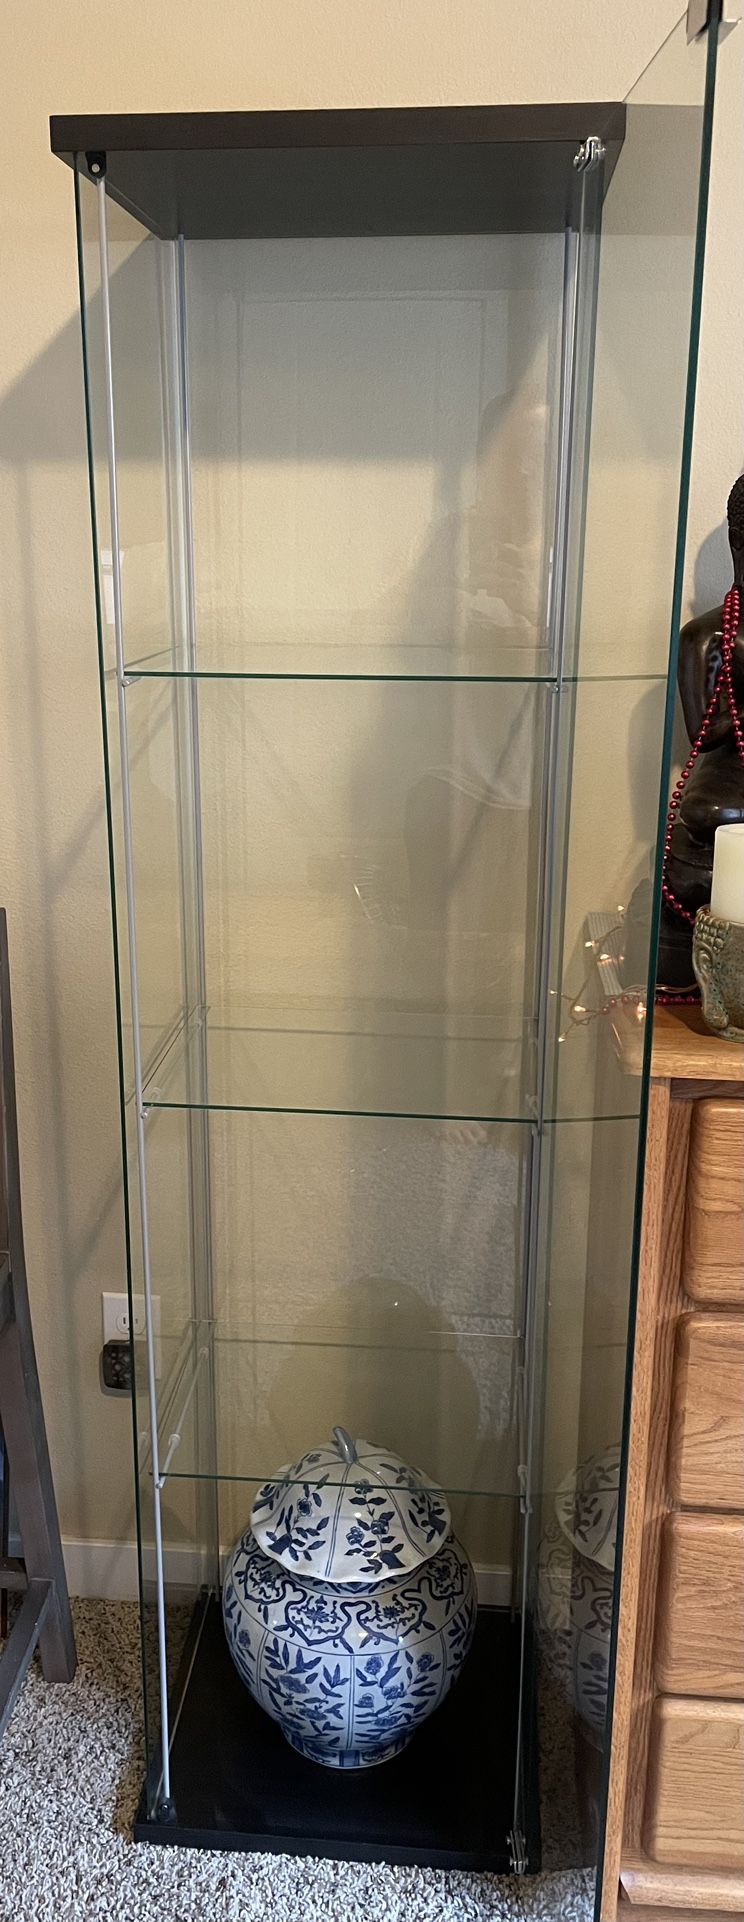 Four Shelf Glass Display Cabinet From Ikea